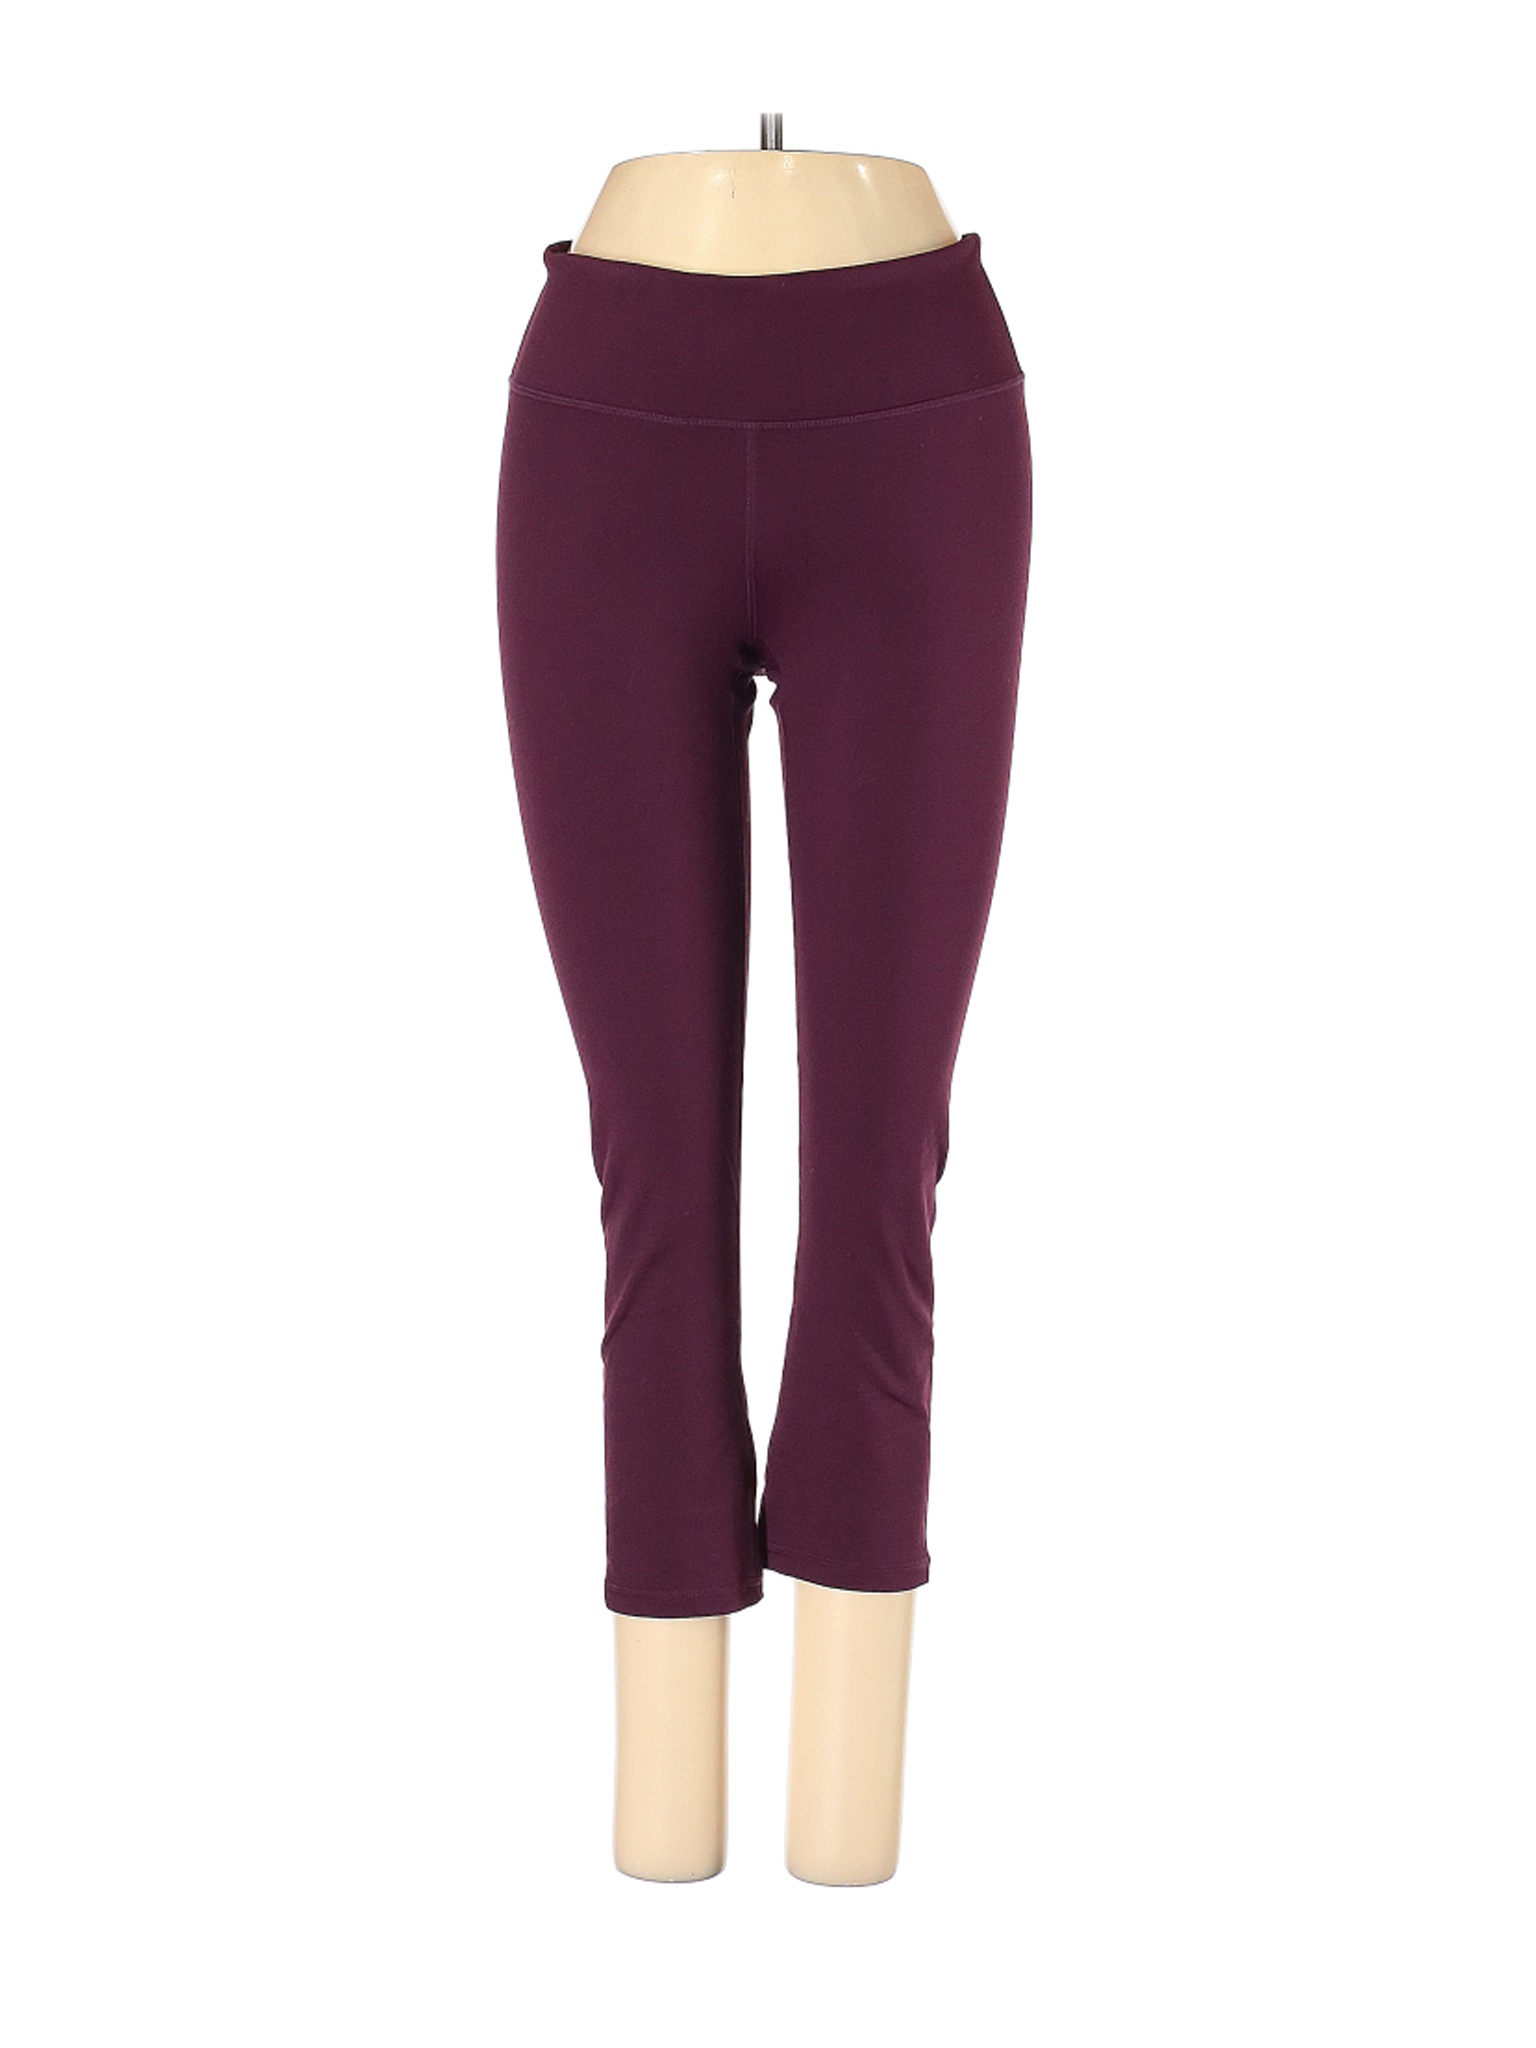 NWT Fabletics Women Purple Active Pants XS | eBay